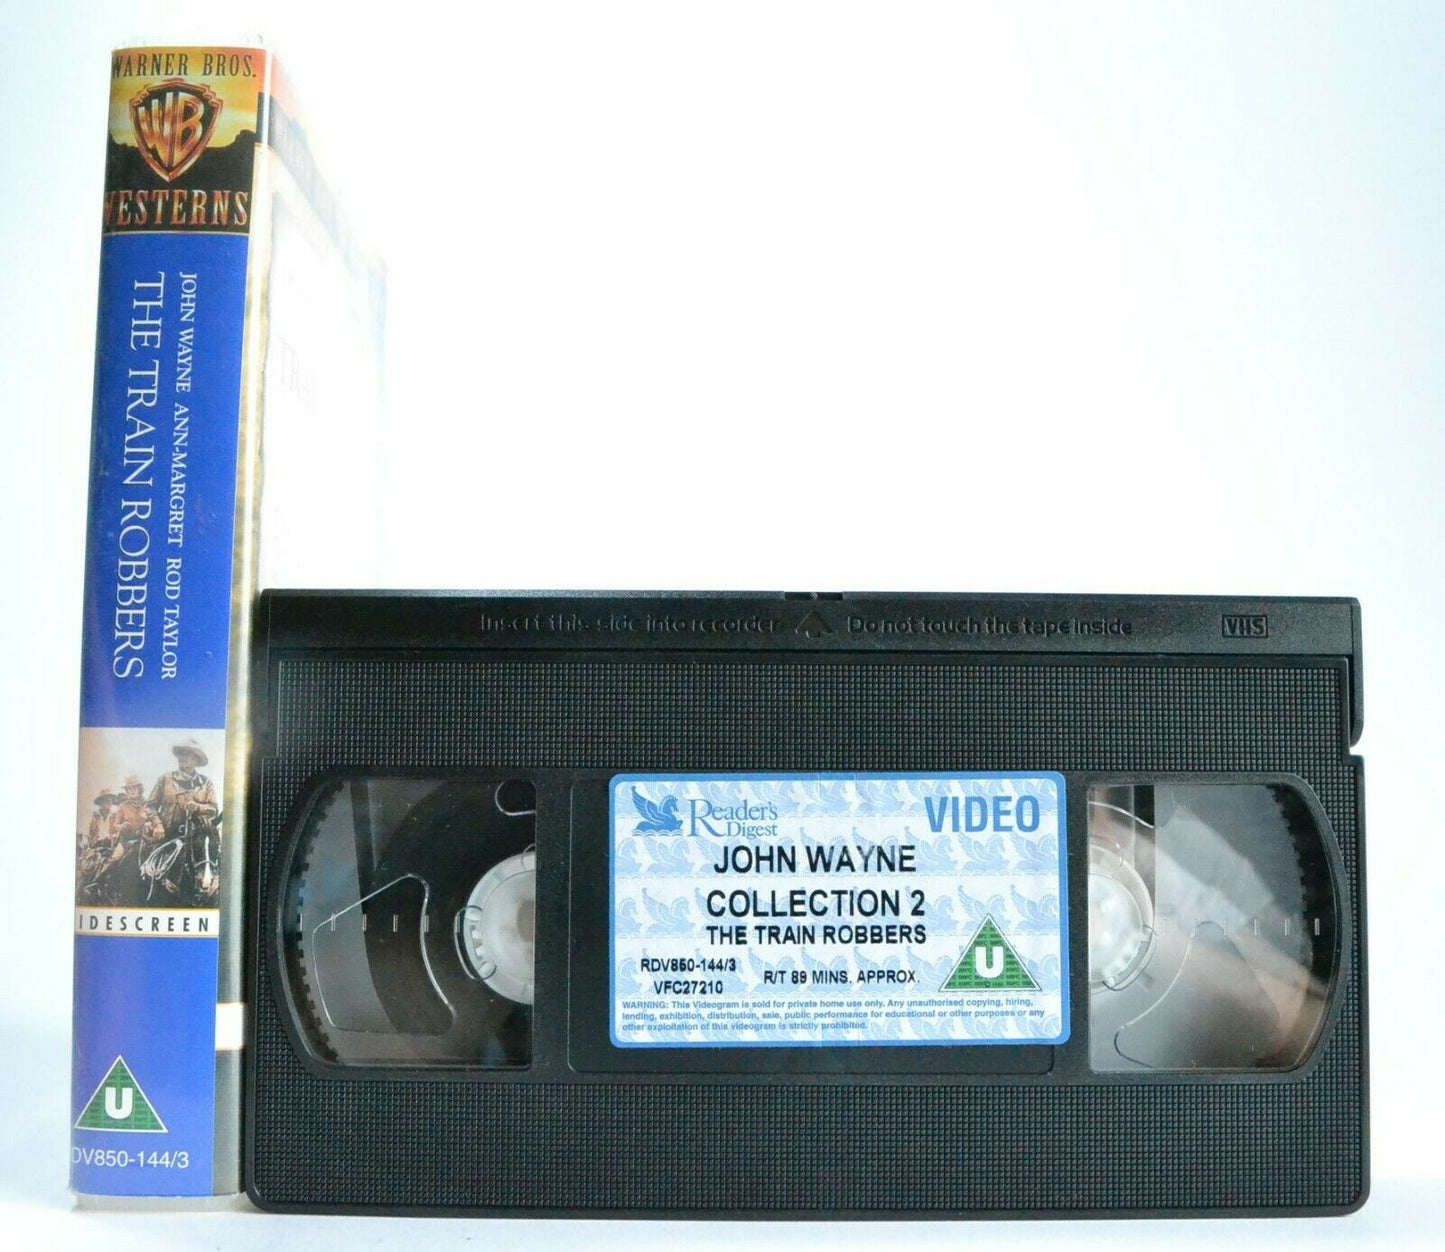 The Train Robbers (1972): Western Classic - Widescreen - John Wayne - Pal VHS-